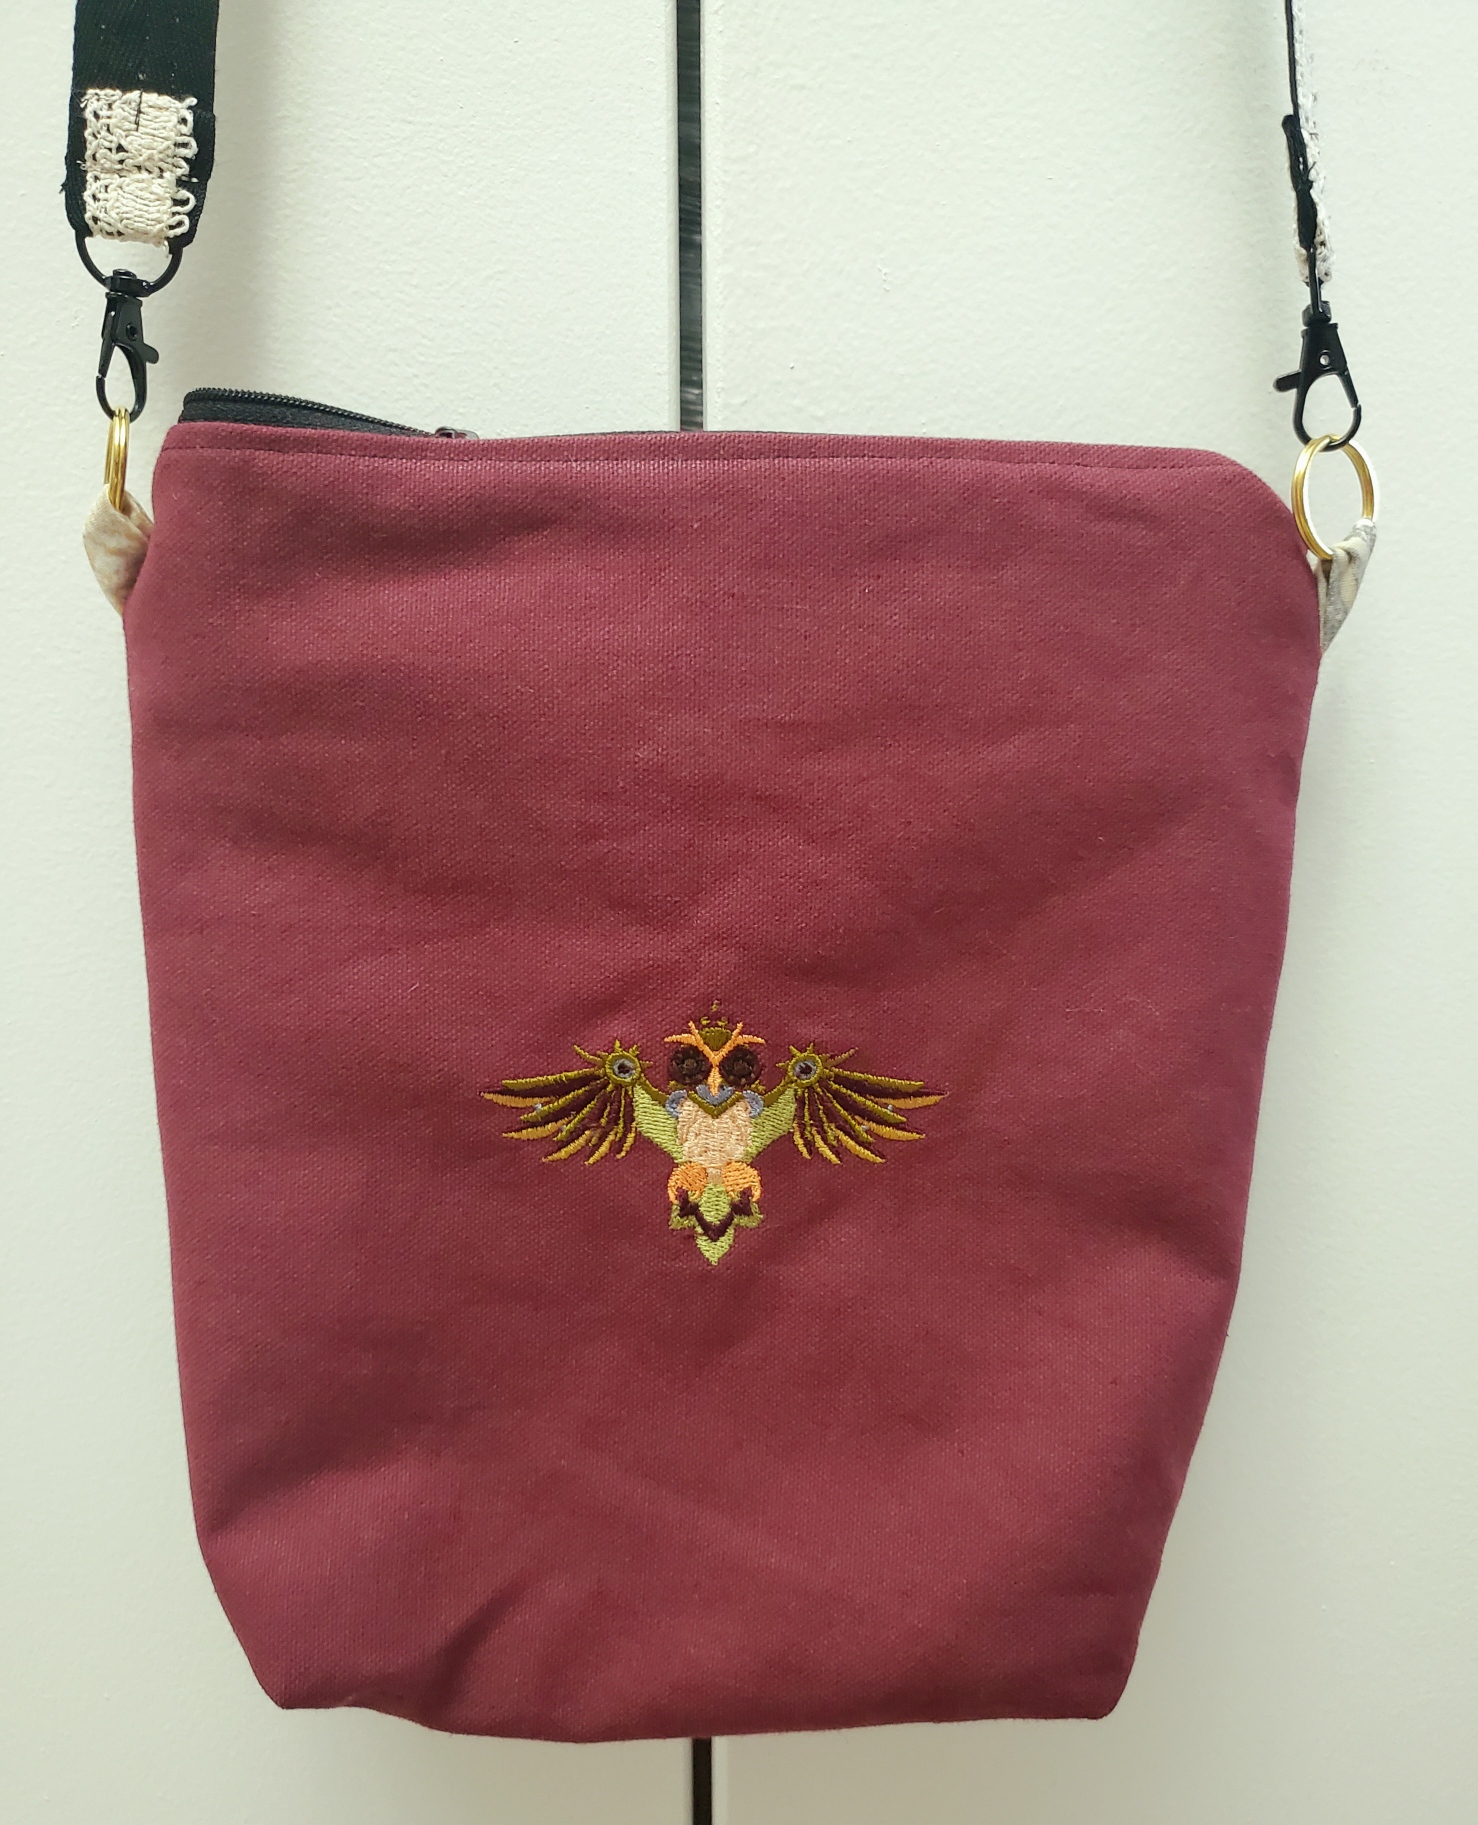 sun-moon-steampunk-bag-Jen's-Bag-embroidered-bag